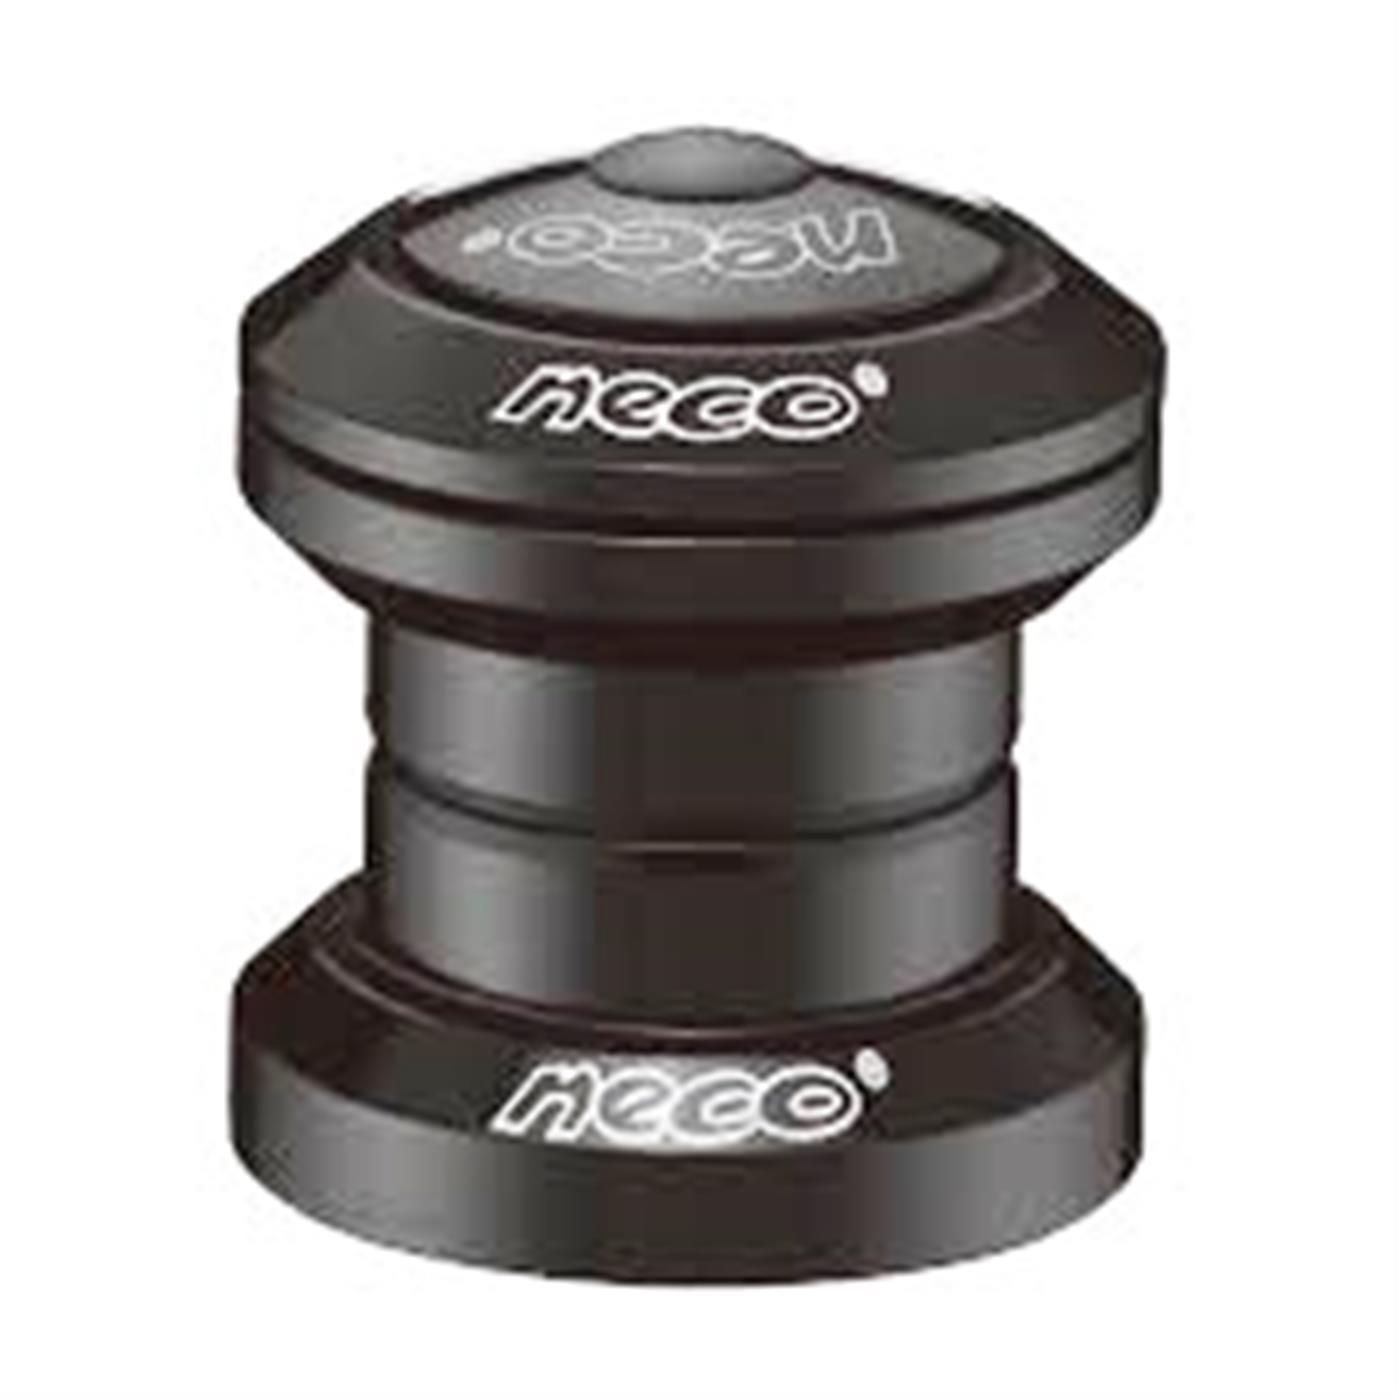 Taza de Direccion NECO H711 1 1/8” Tipo Ahead sin Rosca Balero Sellado Aluminio Negro Cajita